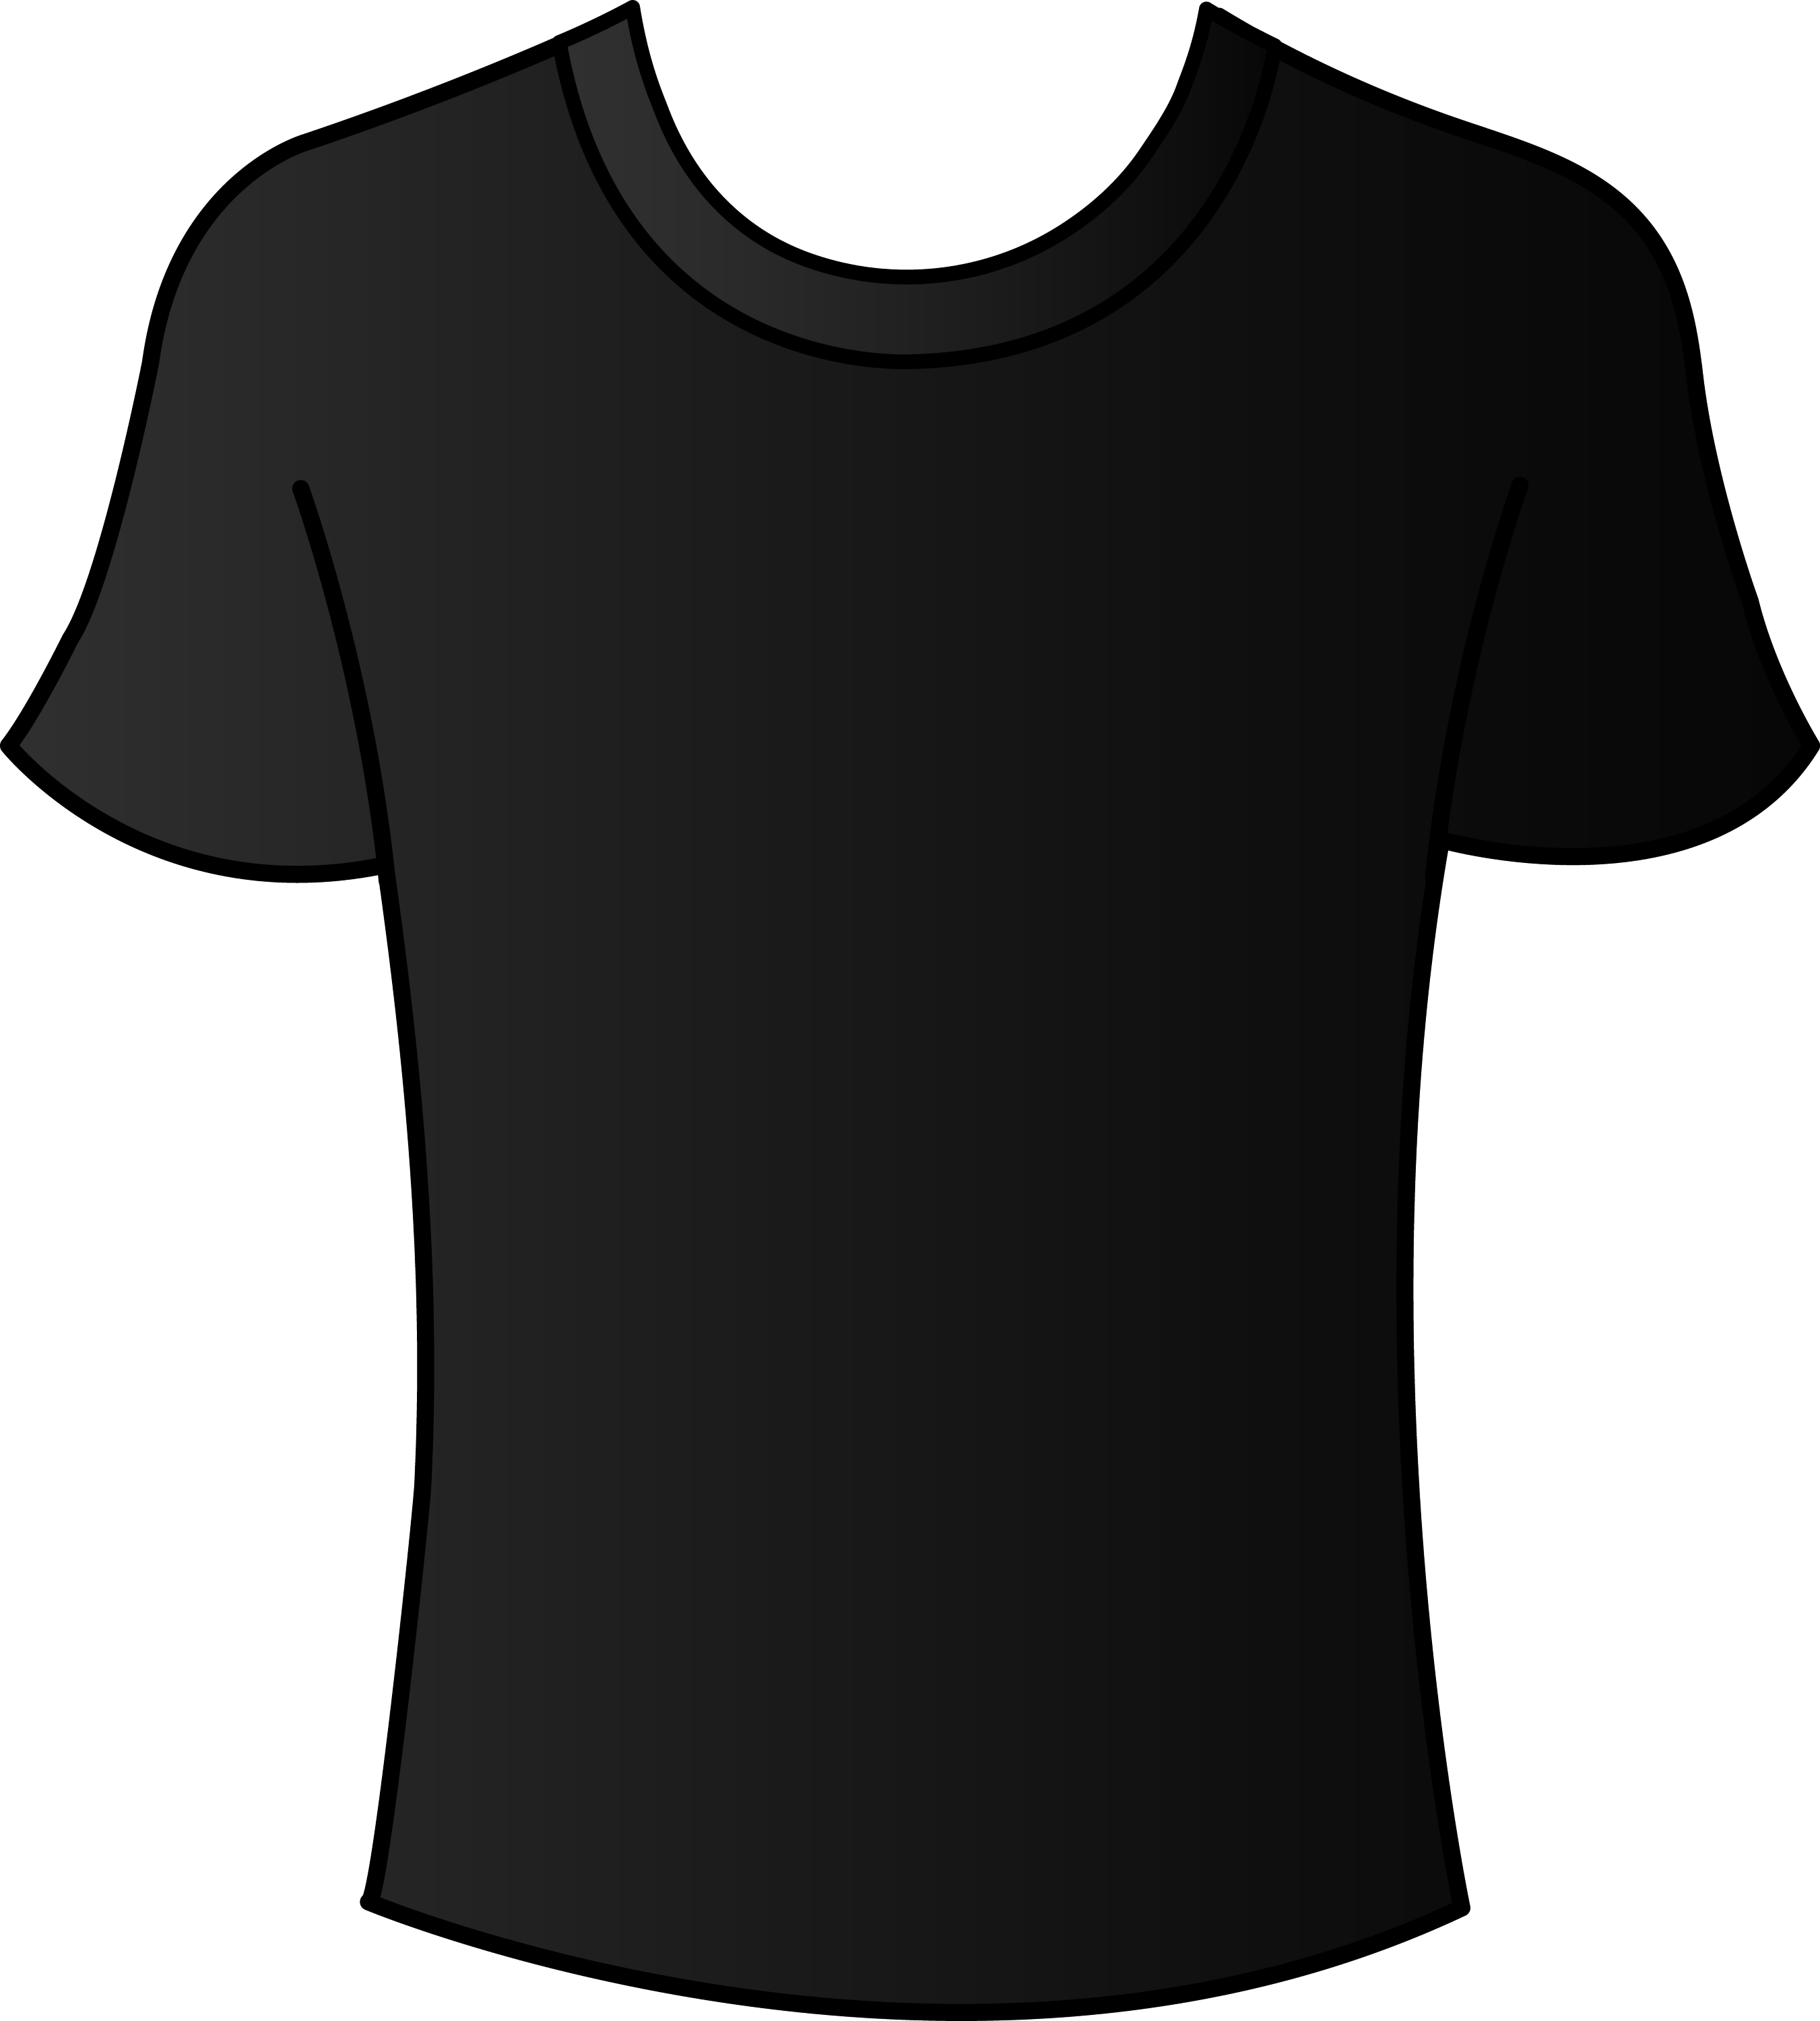 black t shirt clipart - photo #14